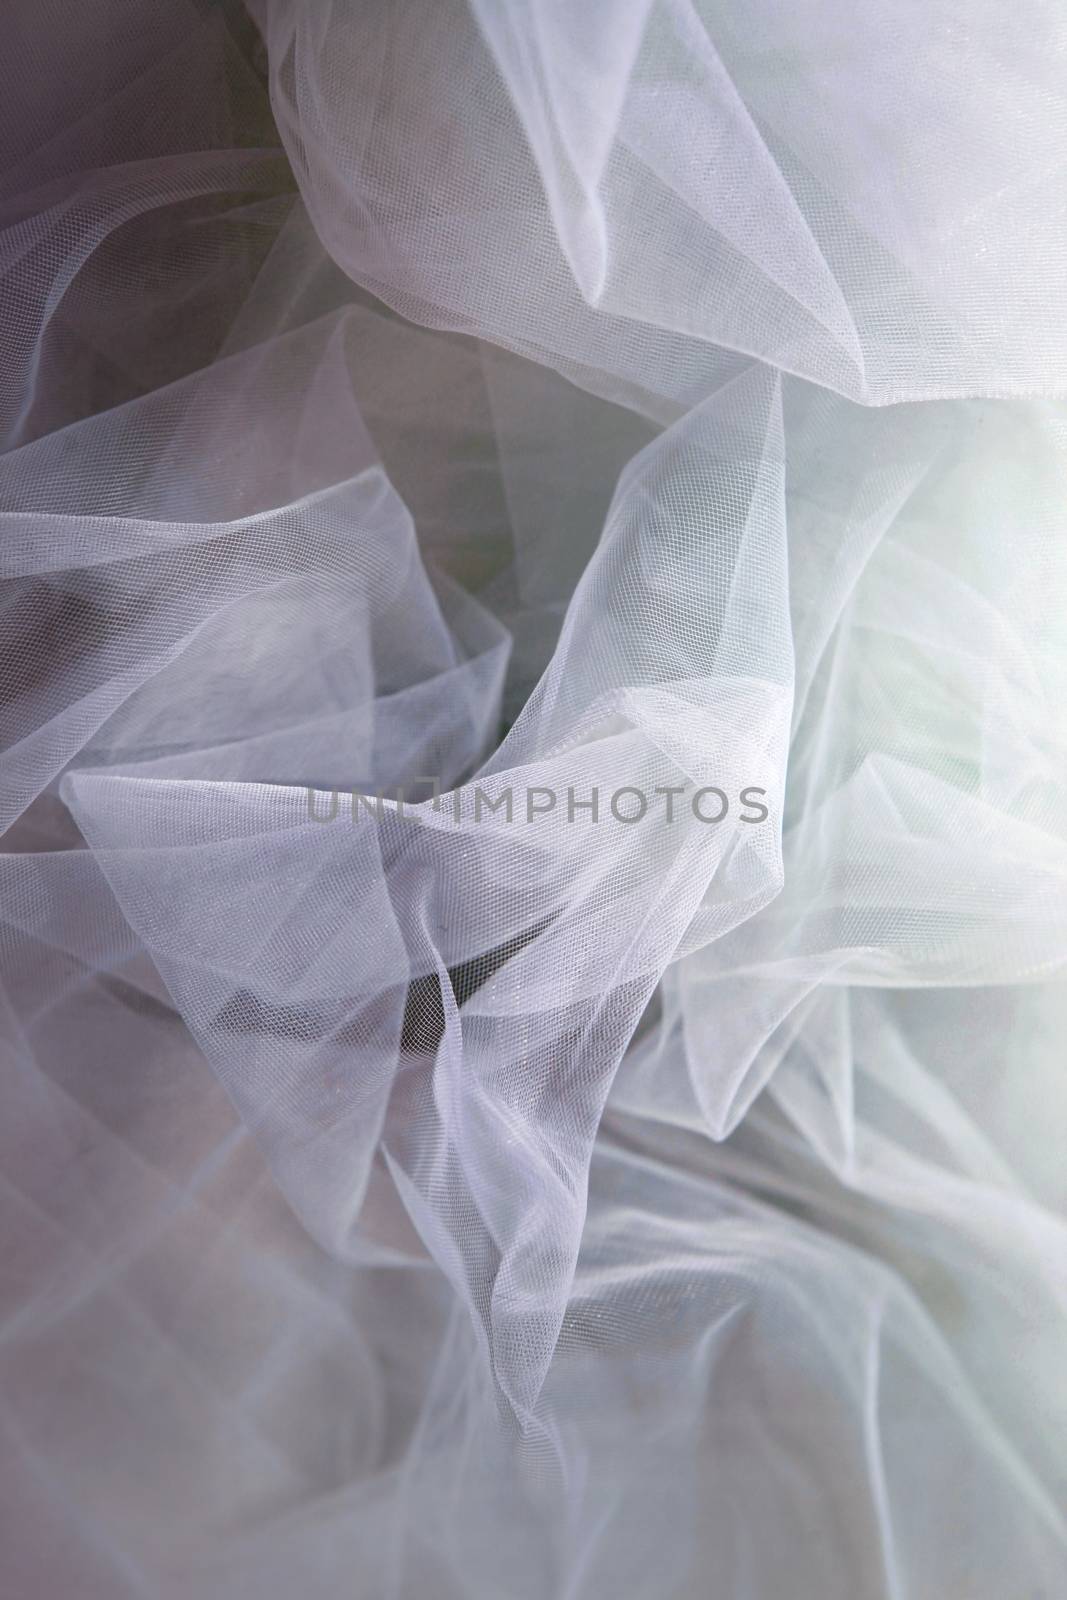 Abstract close up shot of wedding veil